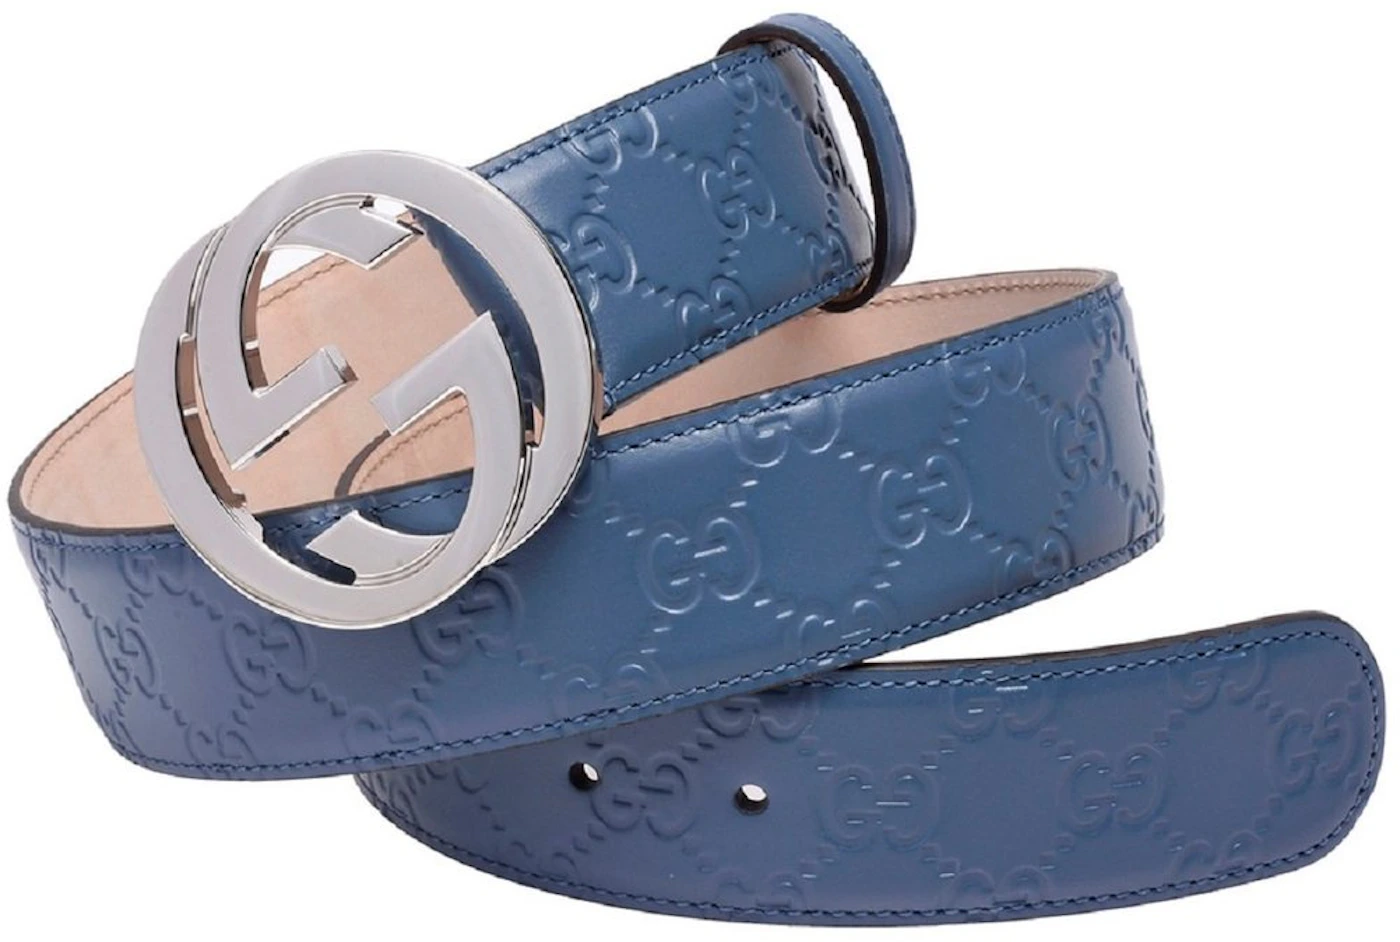 Gg buckle leather belt Gucci Blue size XXS International in Leather -  22557598